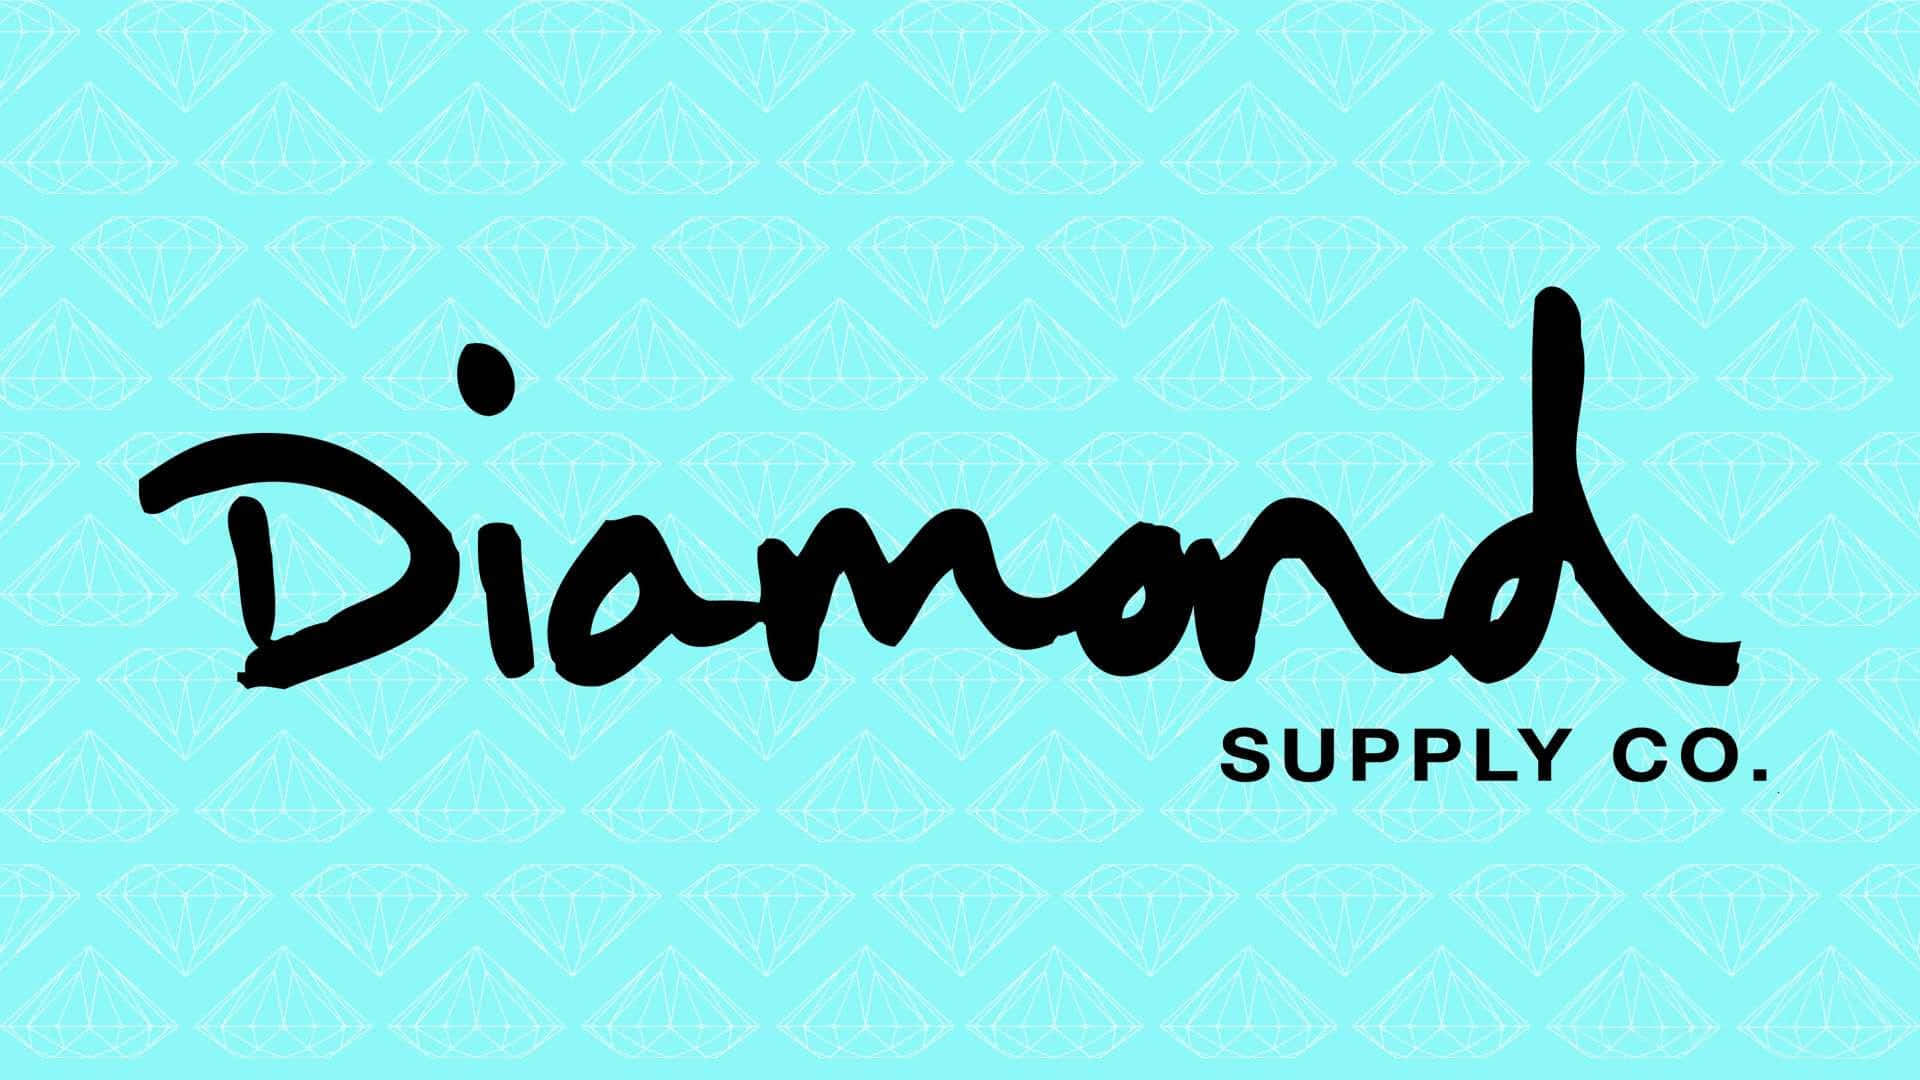 Diamond Supply Co Logo 1920 X 1080 Wallpaper